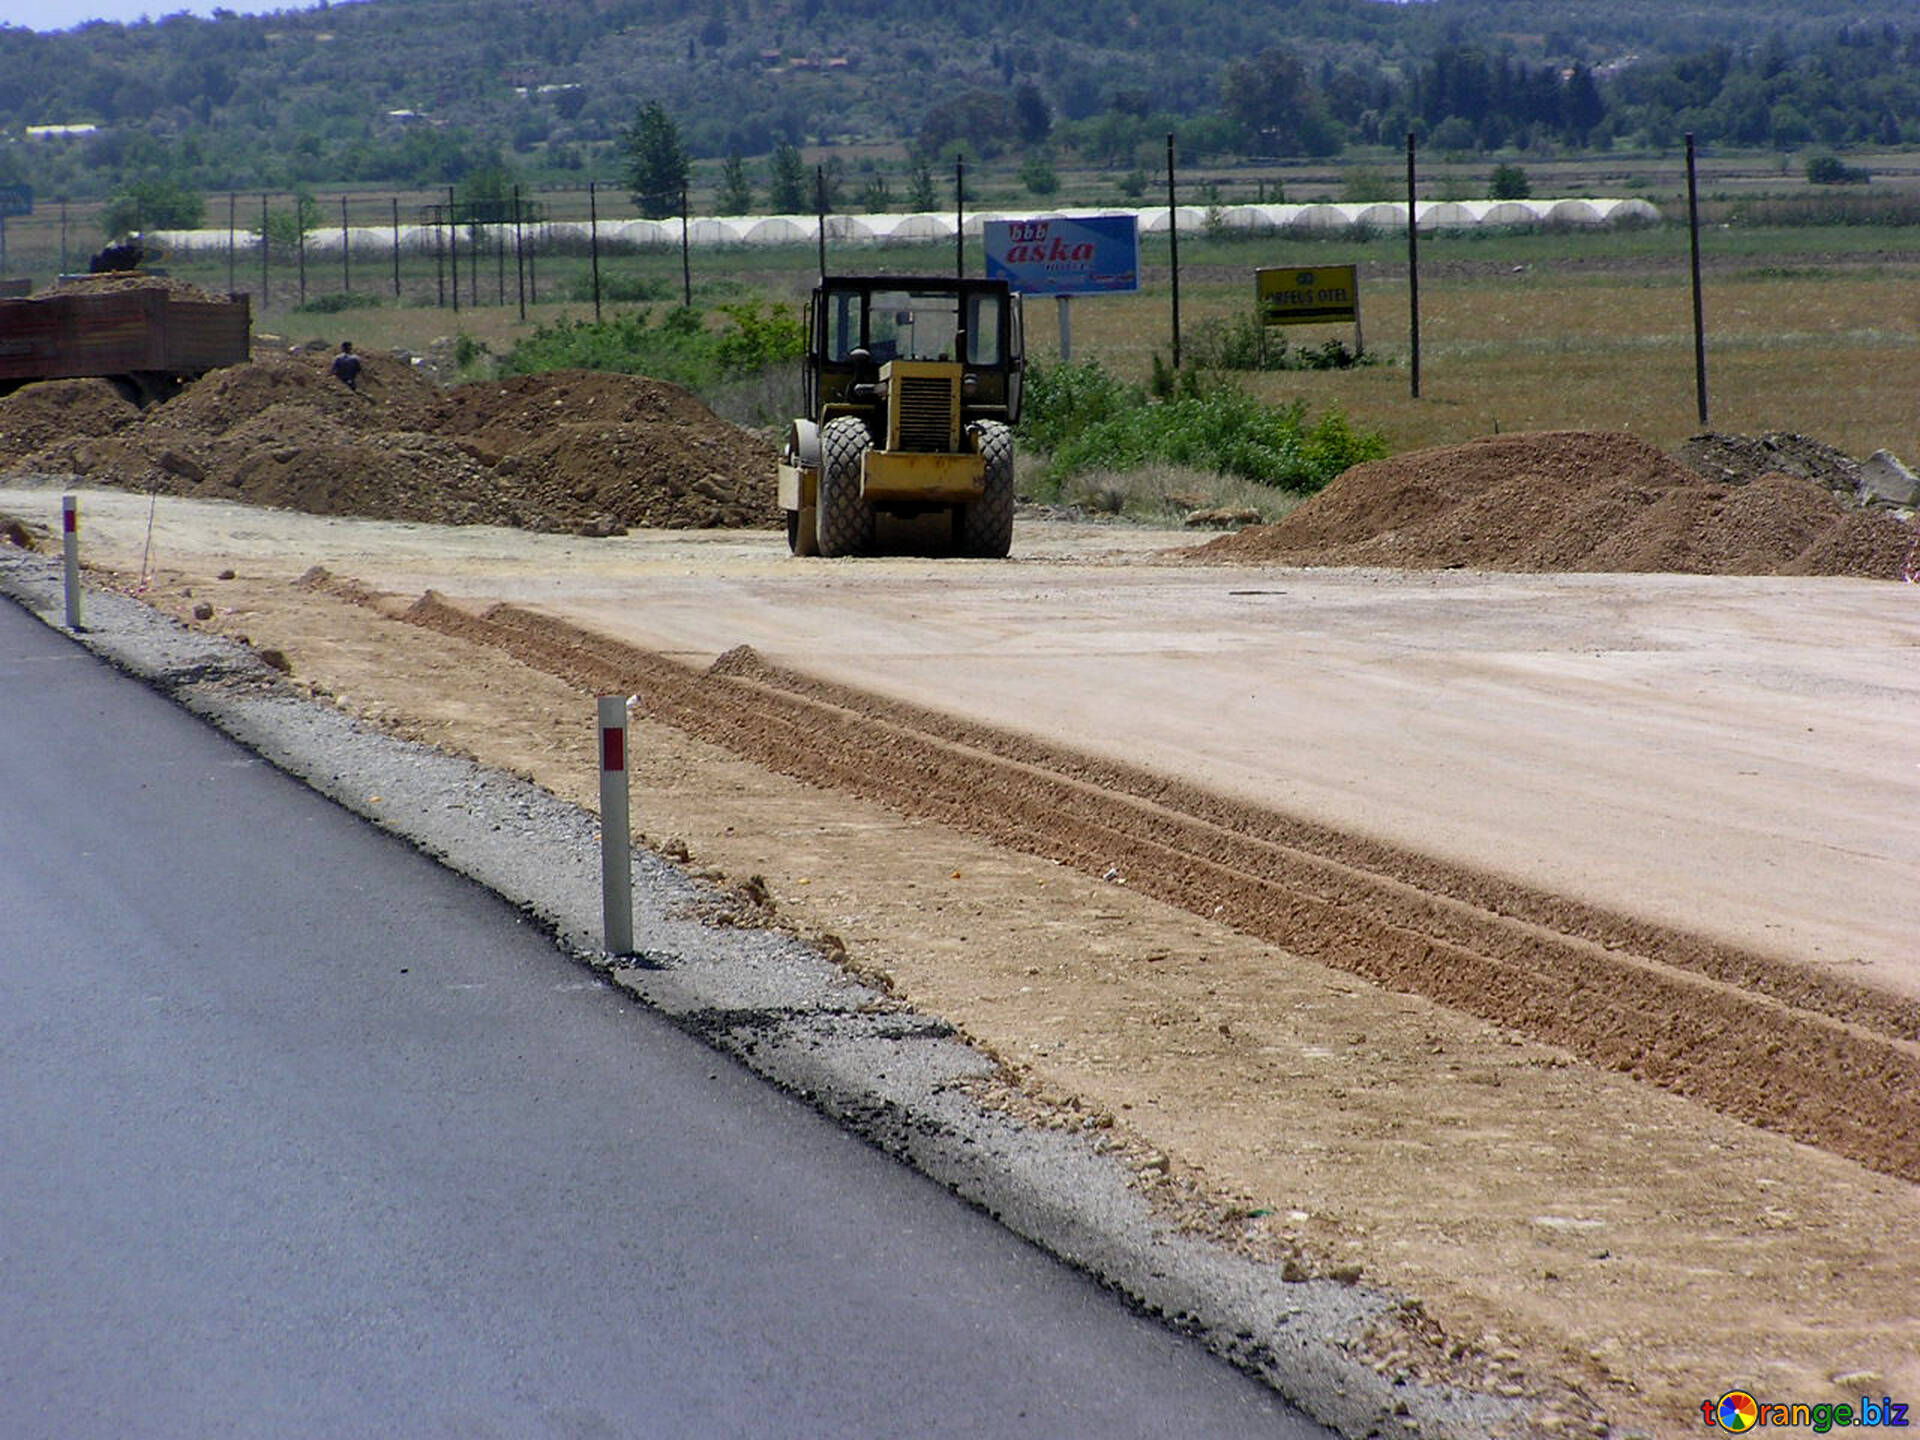 Road Repair Image Construction Of Roads Image Turkey № 21809. Torange.biz Free Pics On Cc By License